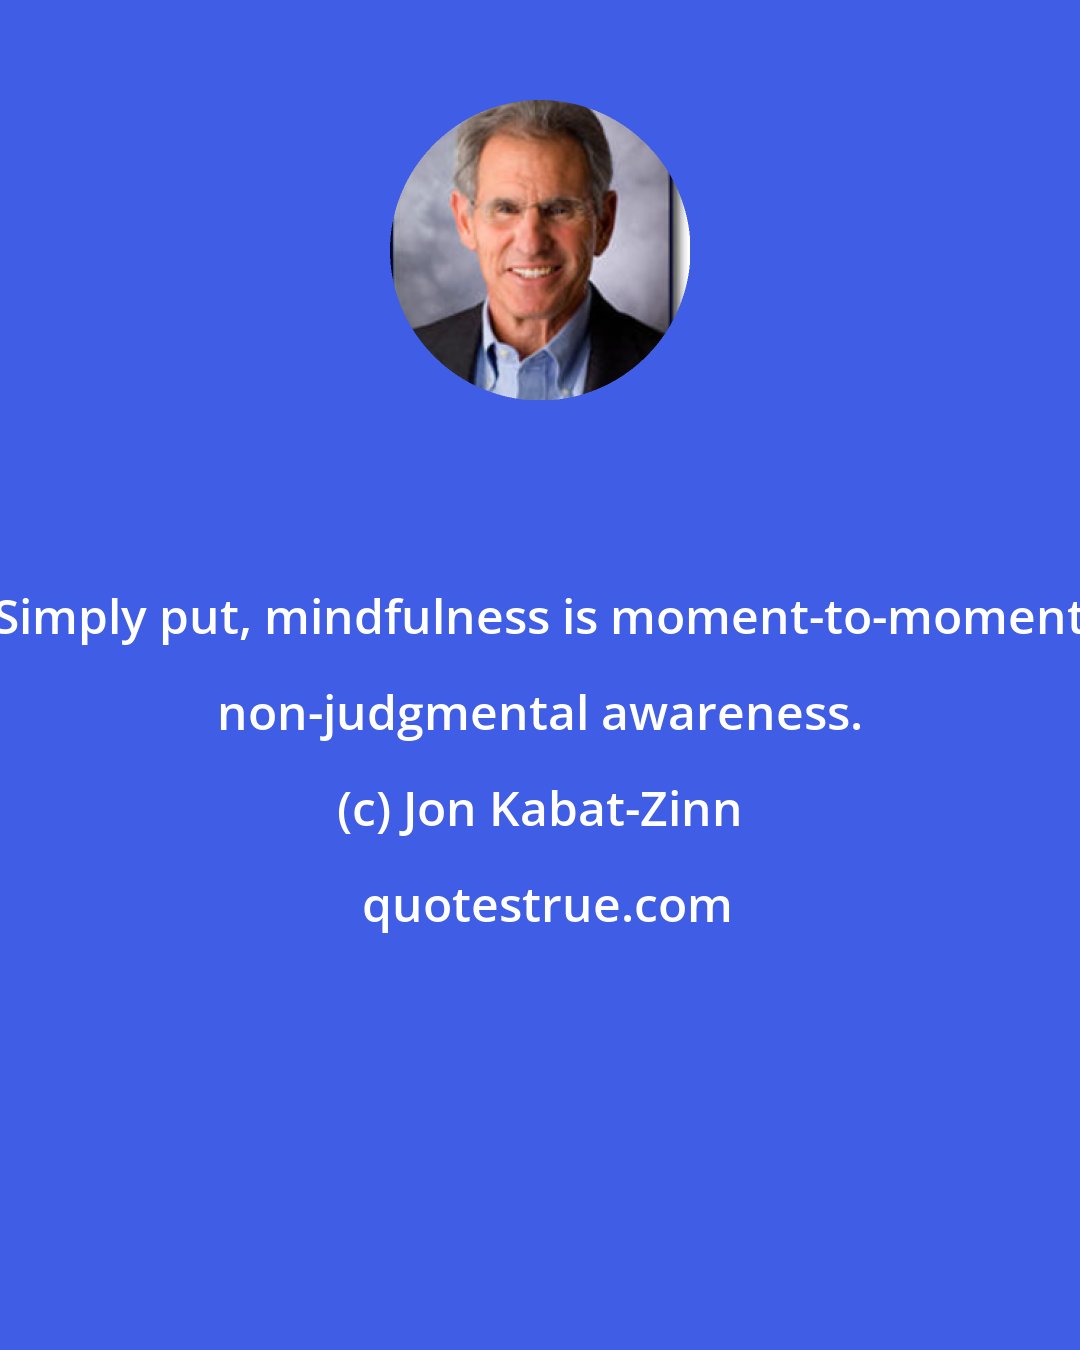 Jon Kabat-Zinn: Simply put, mindfulness is moment-to-moment non-judgmental awareness.